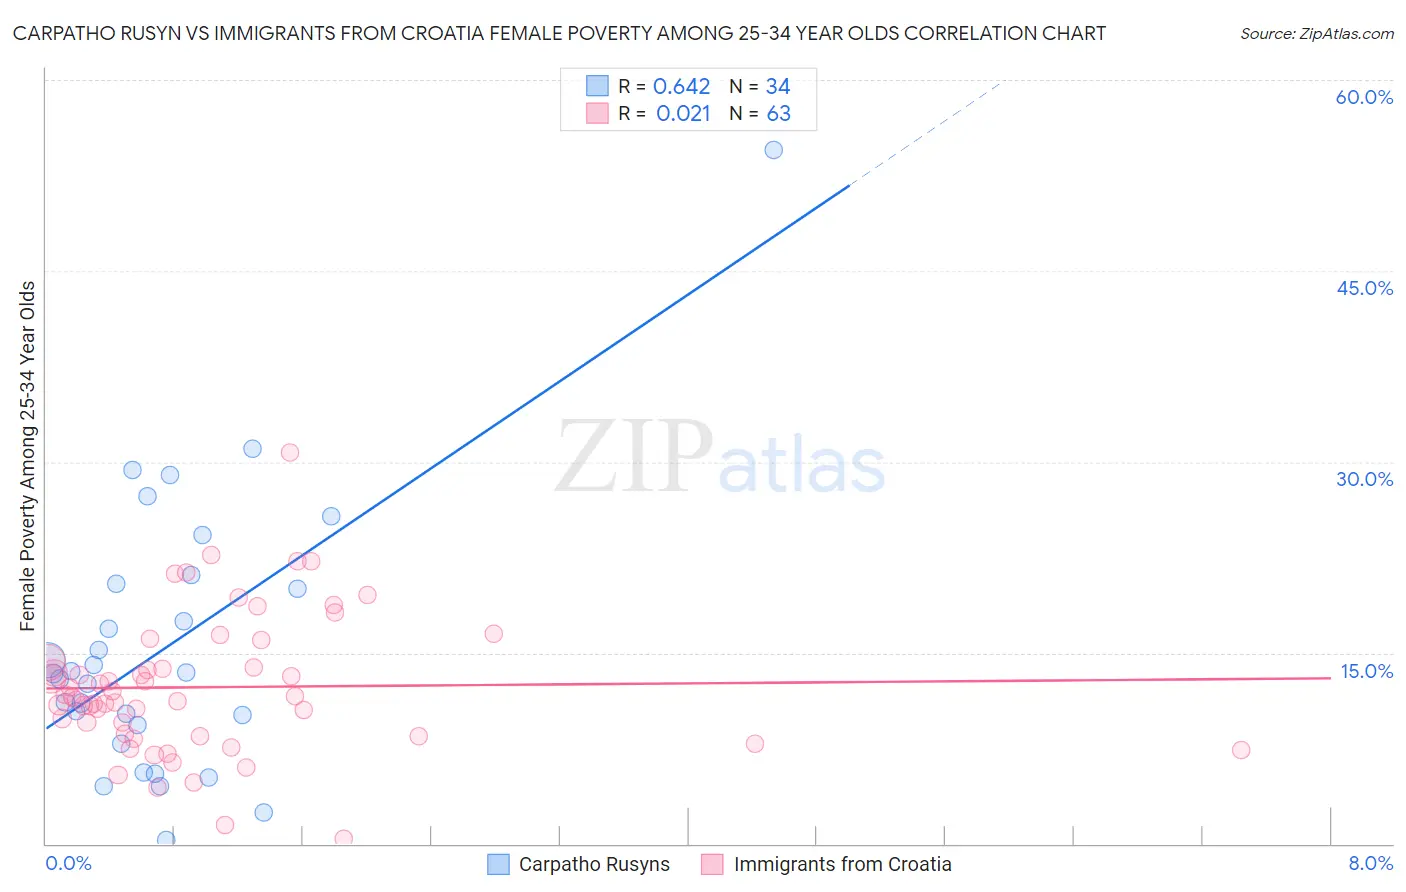 Carpatho Rusyn vs Immigrants from Croatia Female Poverty Among 25-34 Year Olds